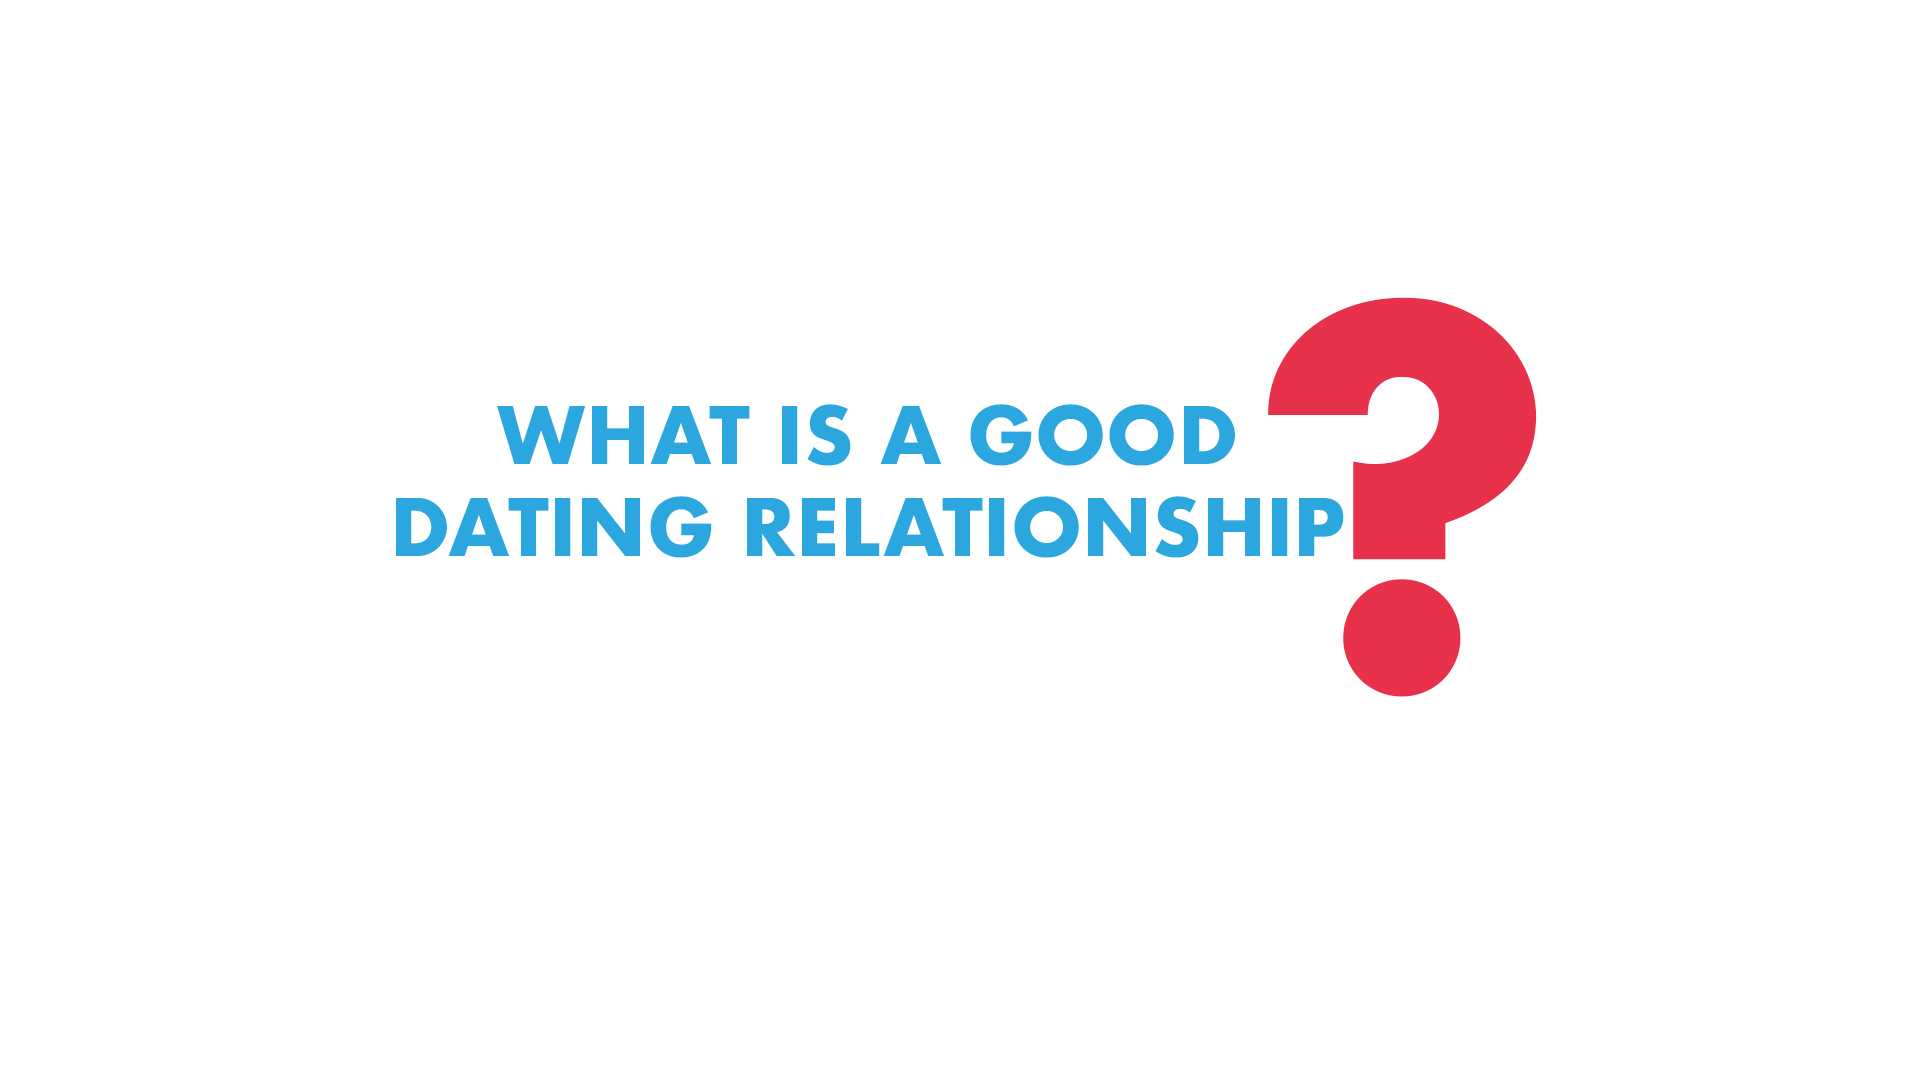 Would you Describe a Good Relationship between a Boyfriend and Girlfriend?